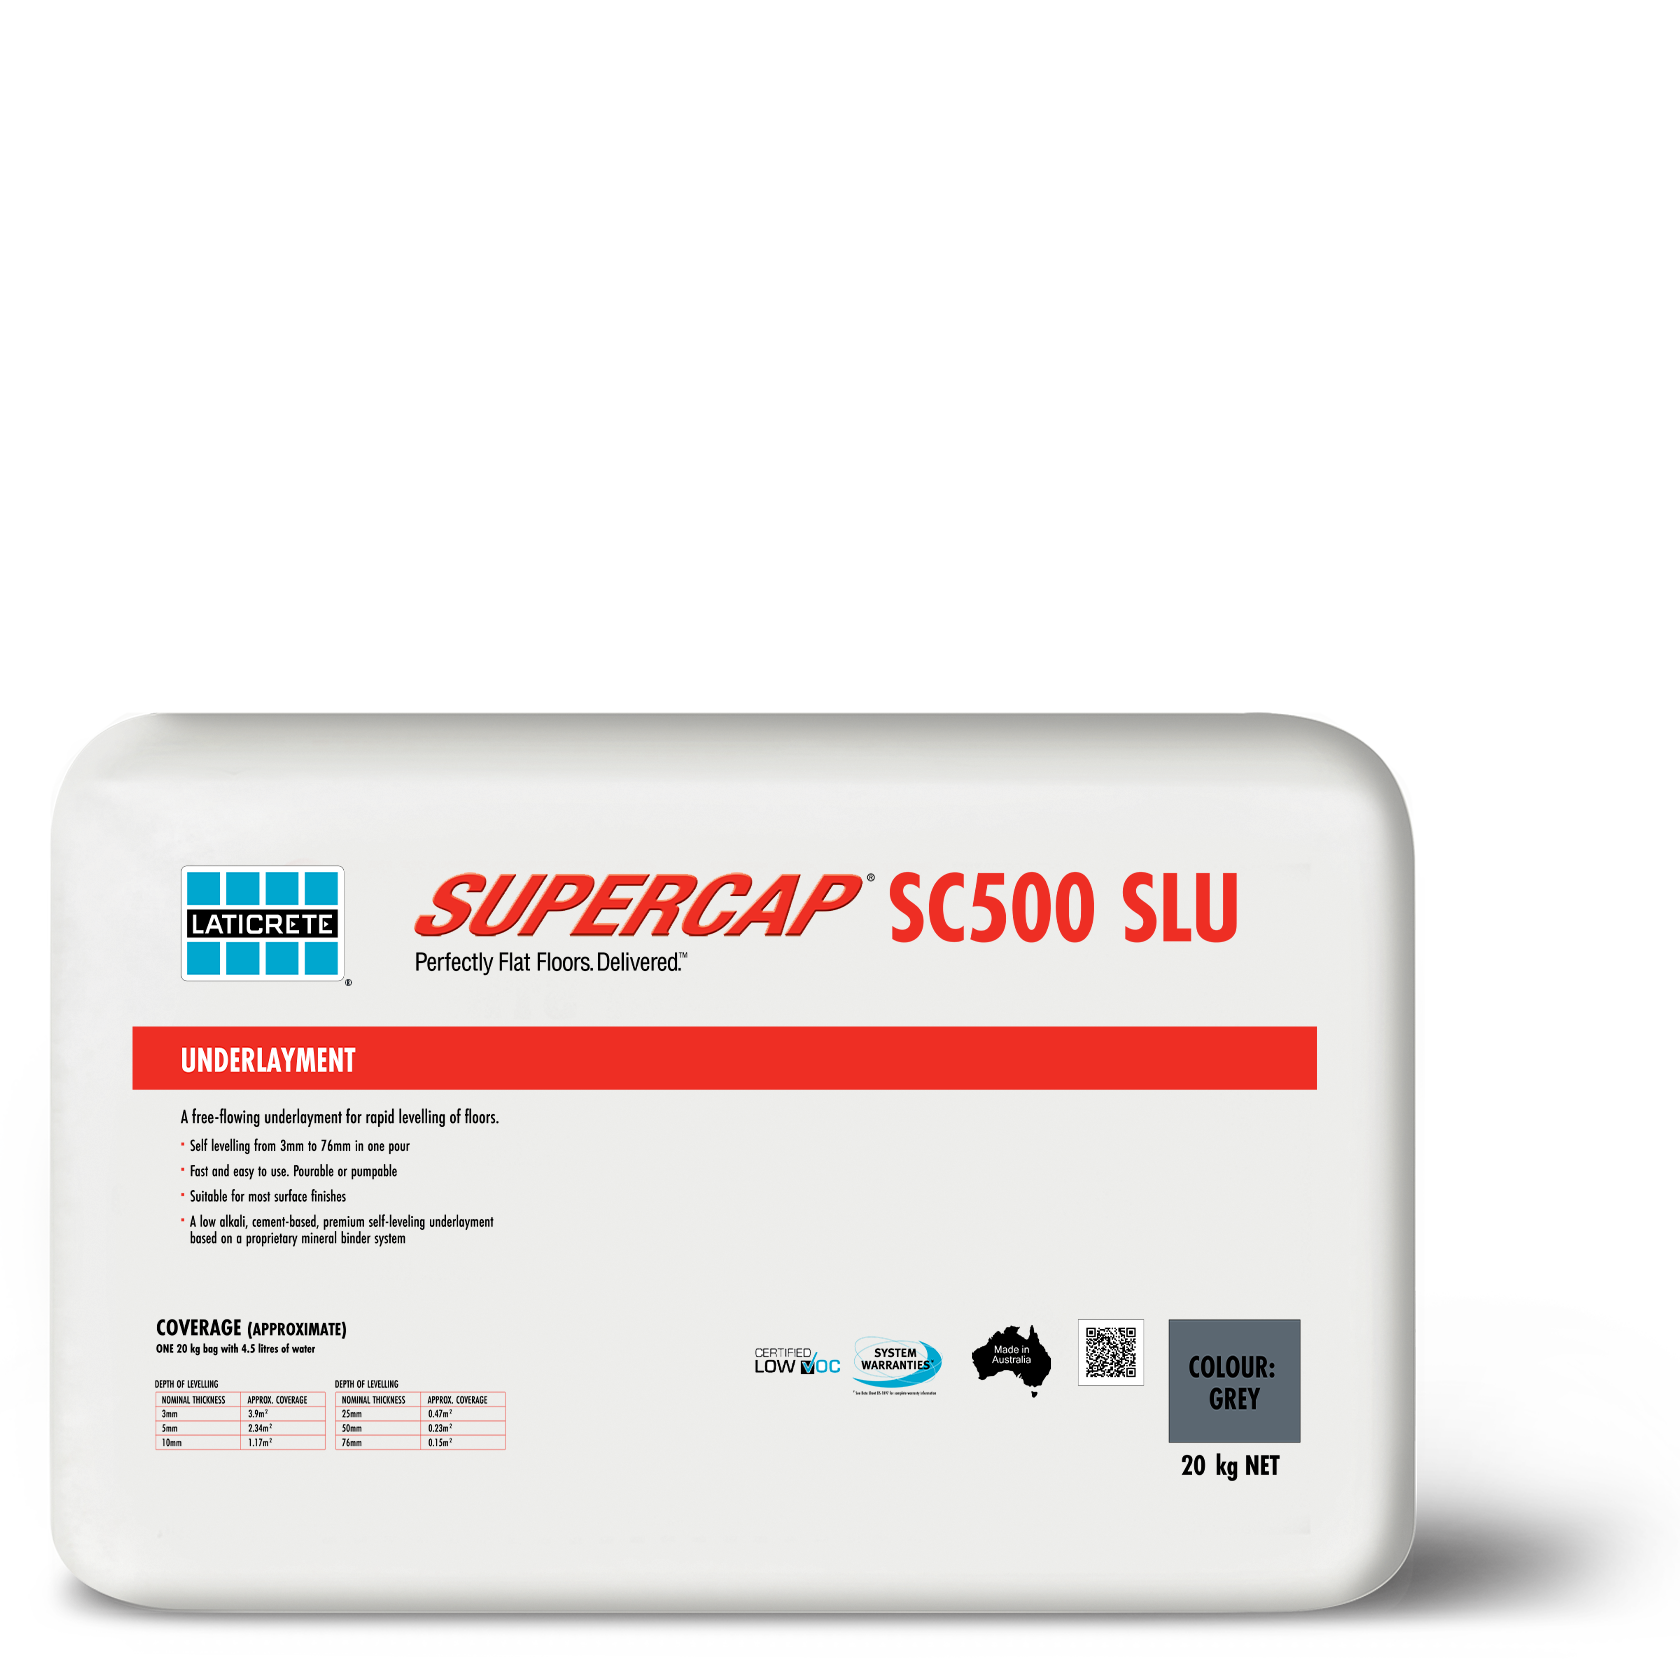 SUPERCAP SC-500 SLU